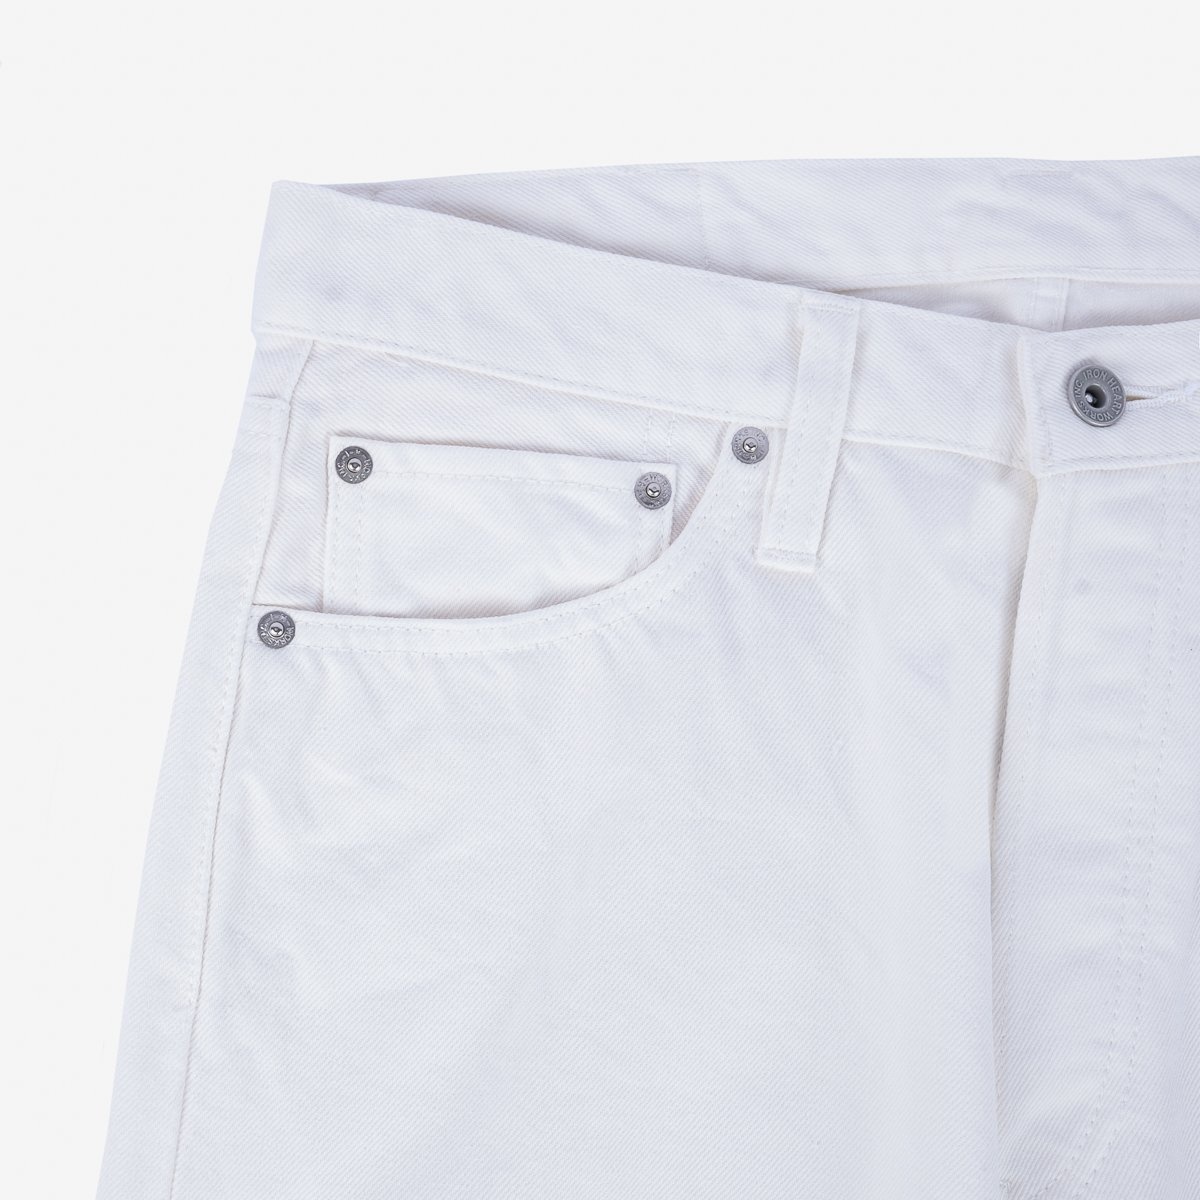 IH-888-WT 13.5oz Denim Medium/High Rise Tapered Cut Jeans - White - 6